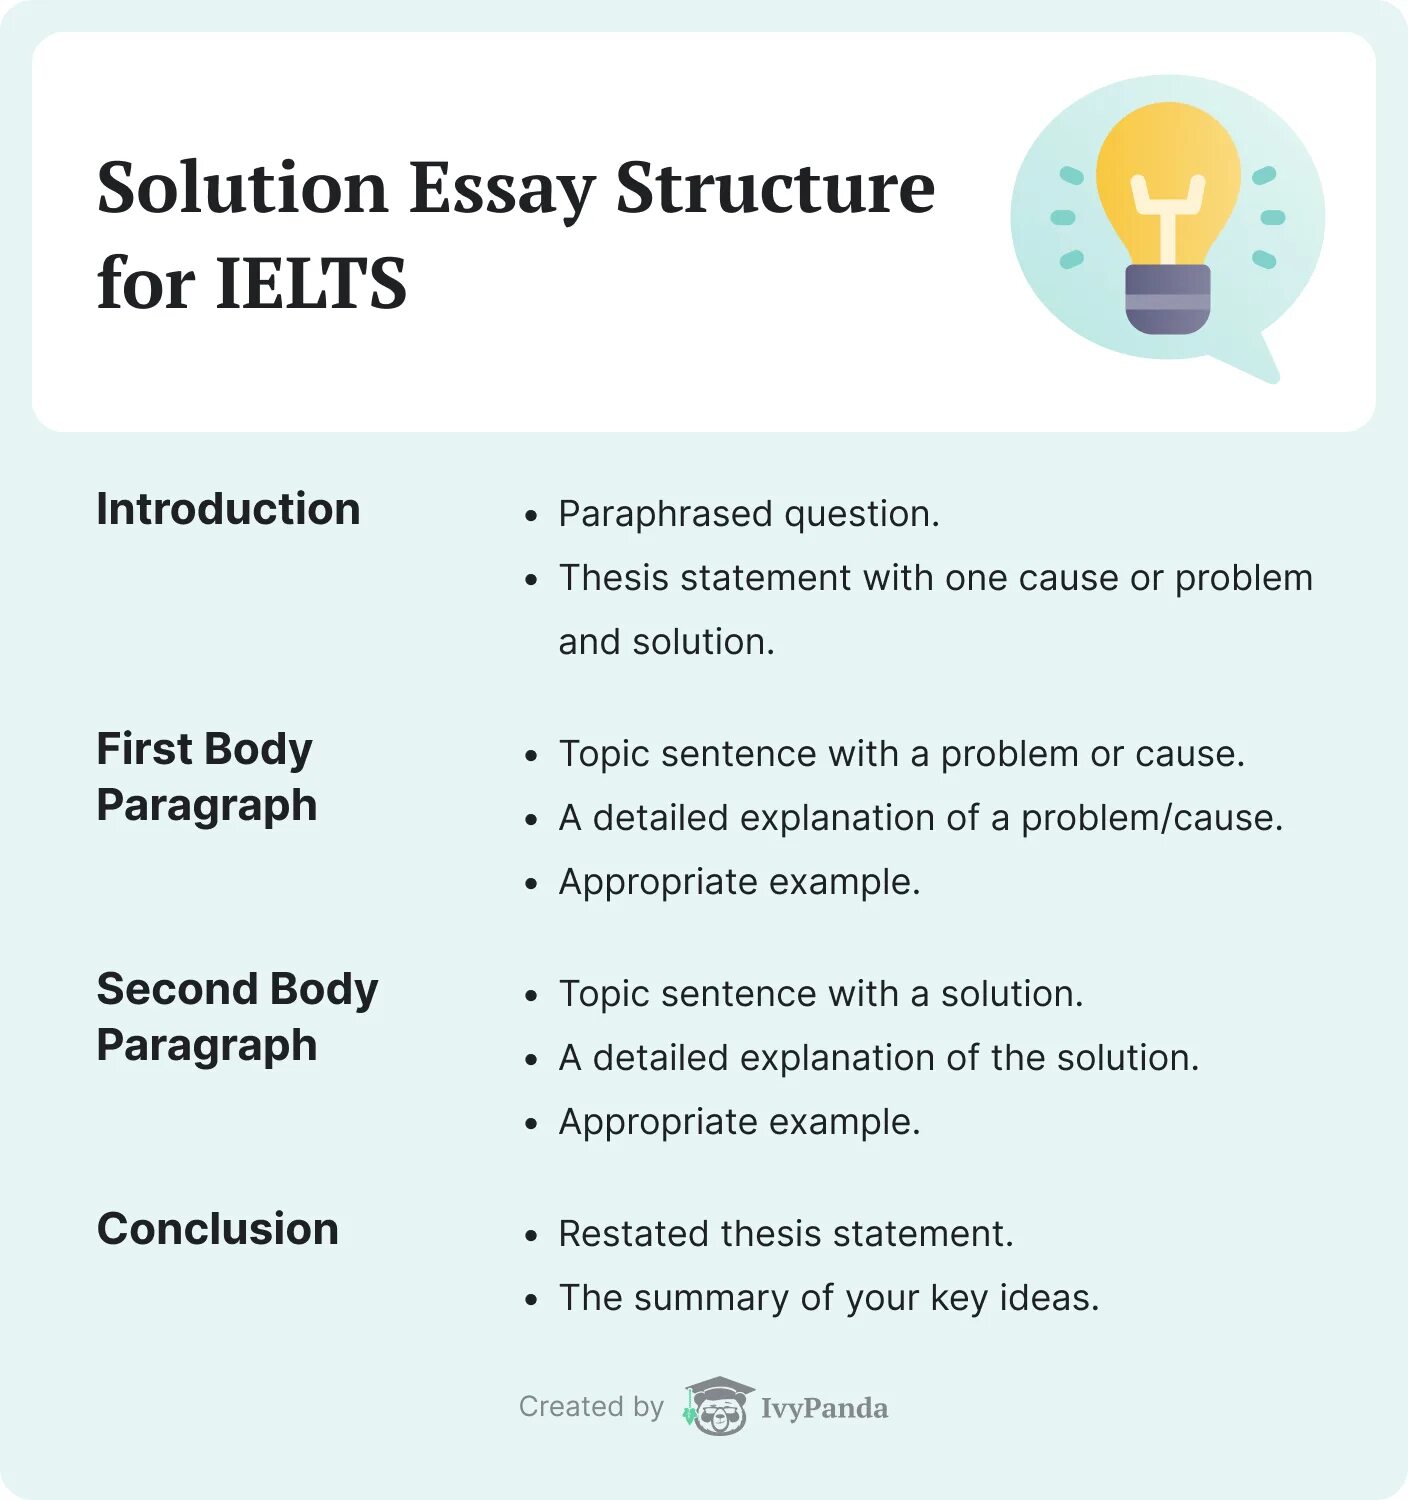 Opinion essay IELTS структура. IELTS essay structure. IELTS discussion essay structure. Структура эссе IELTS. Discuss essay